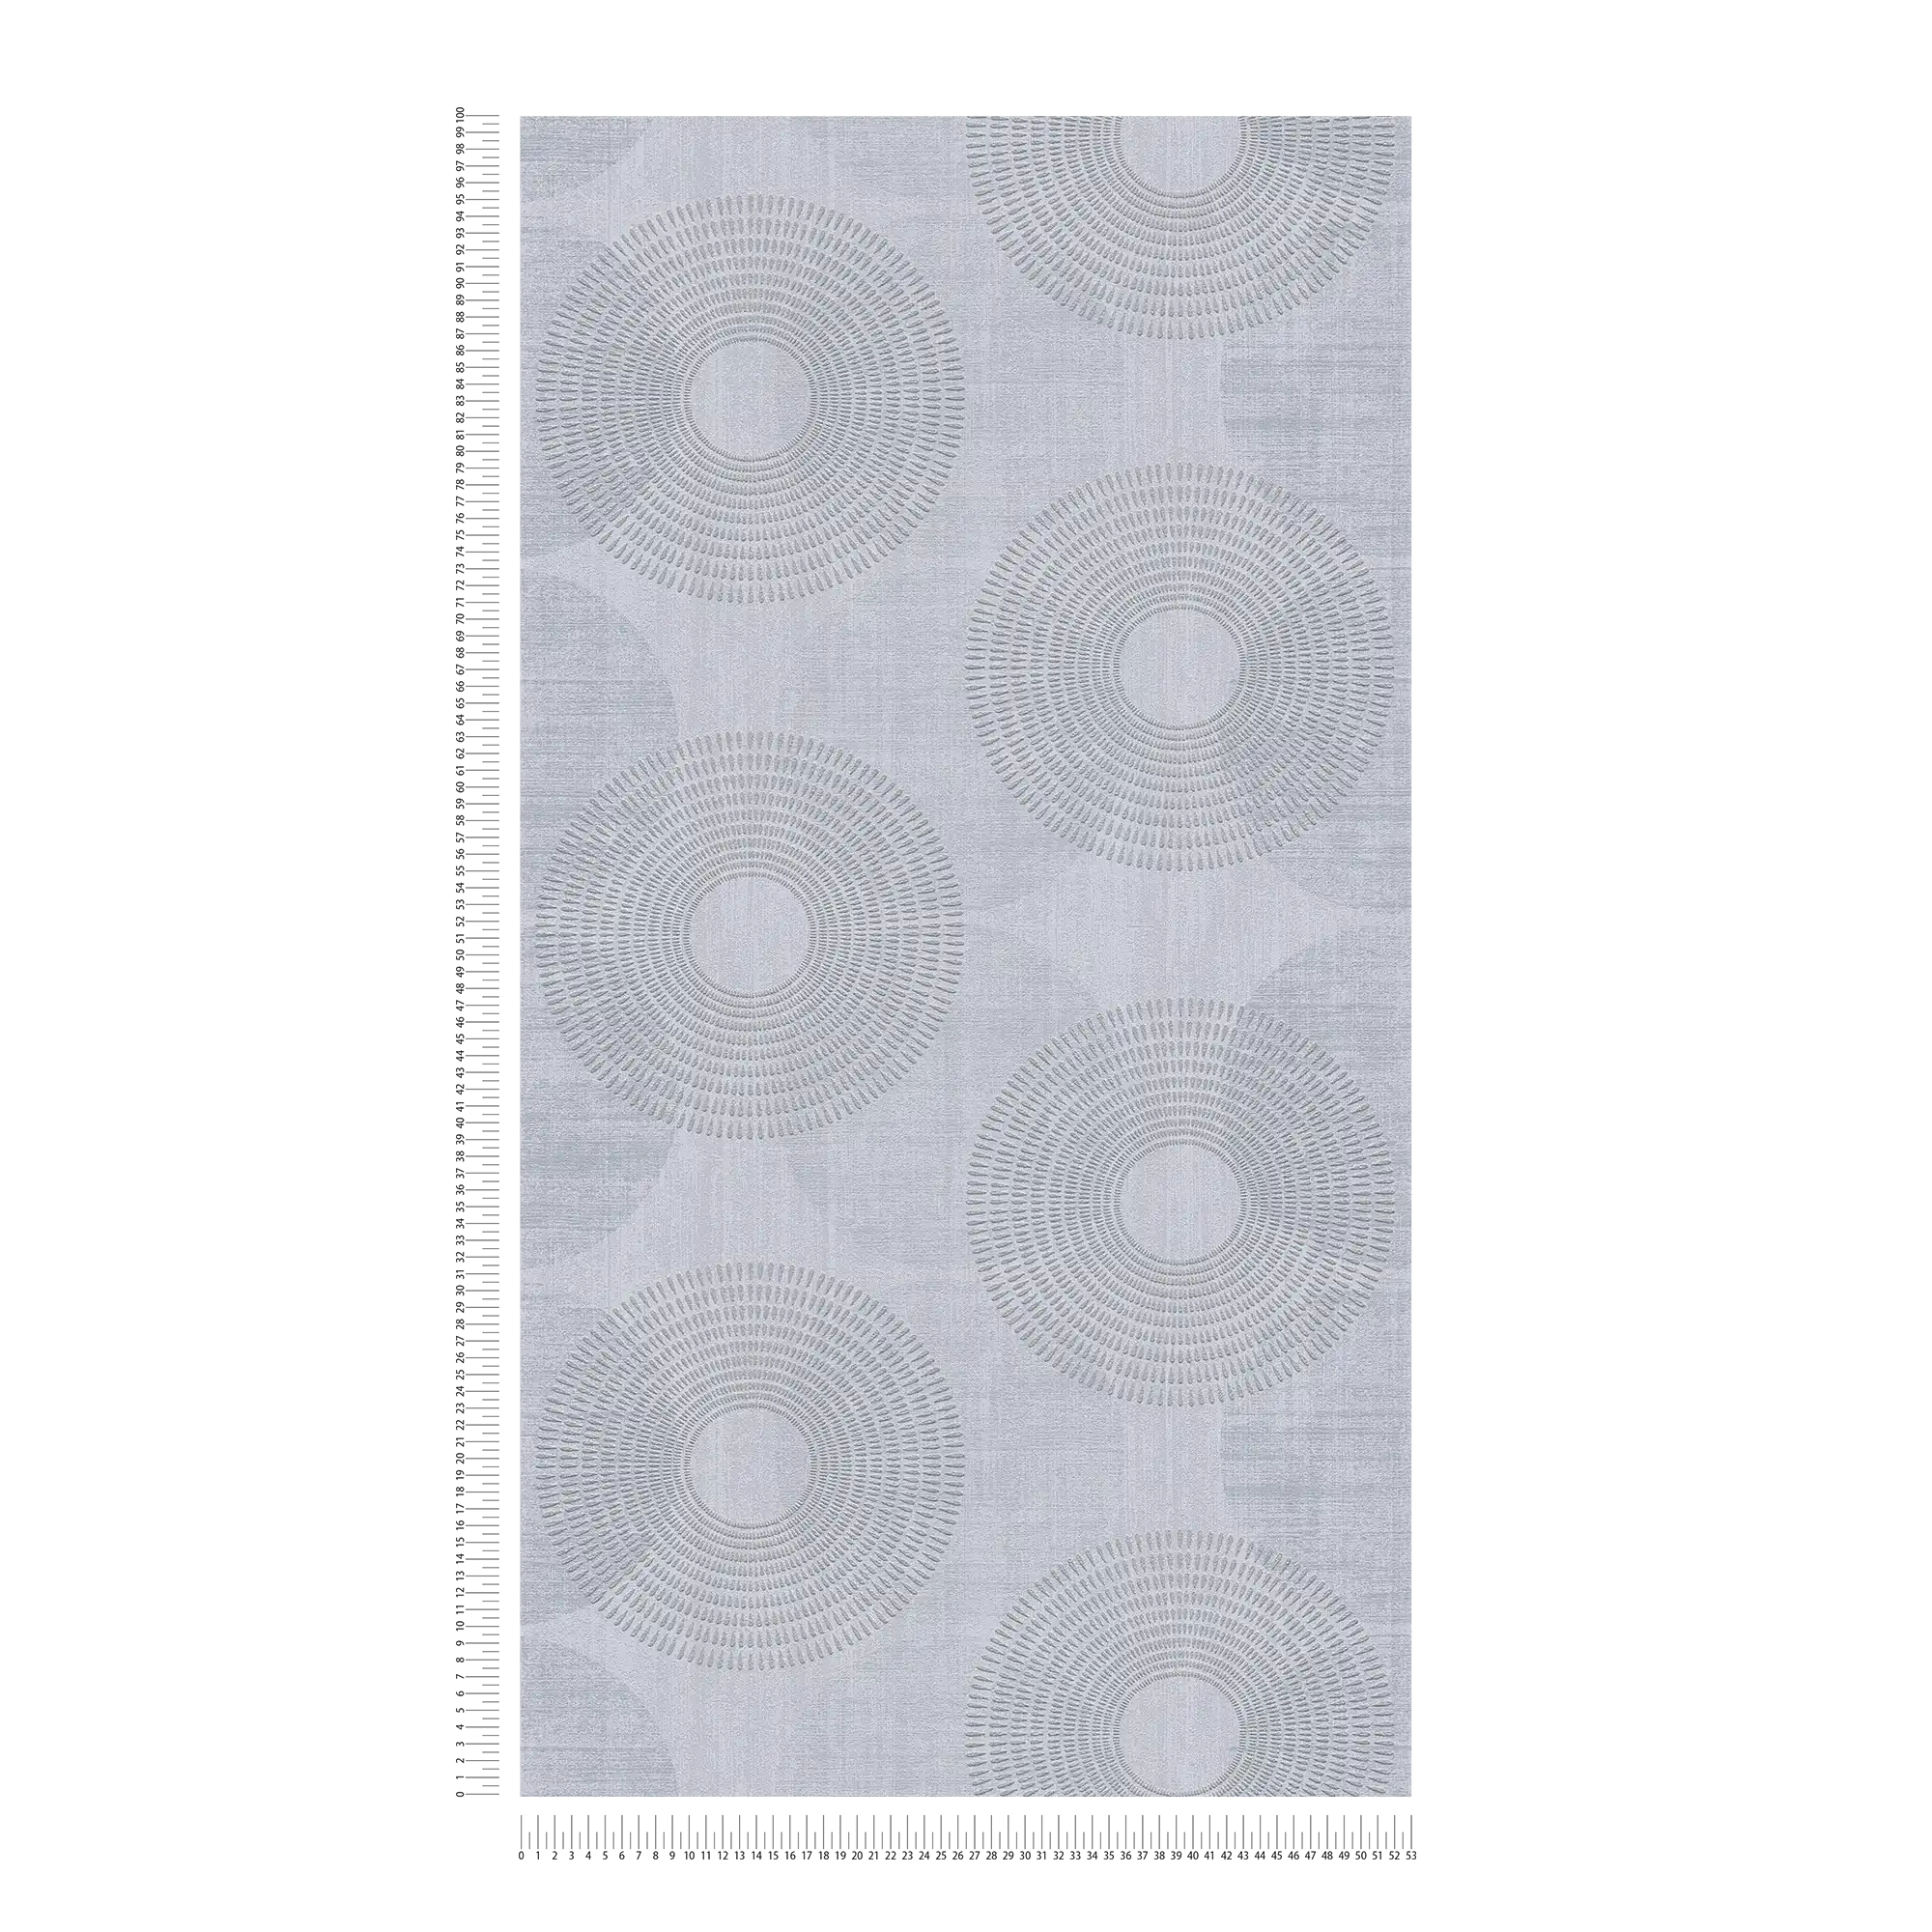             Papel pintado moderno en tejido no tejido con motivos circulares abstractos - gris
        